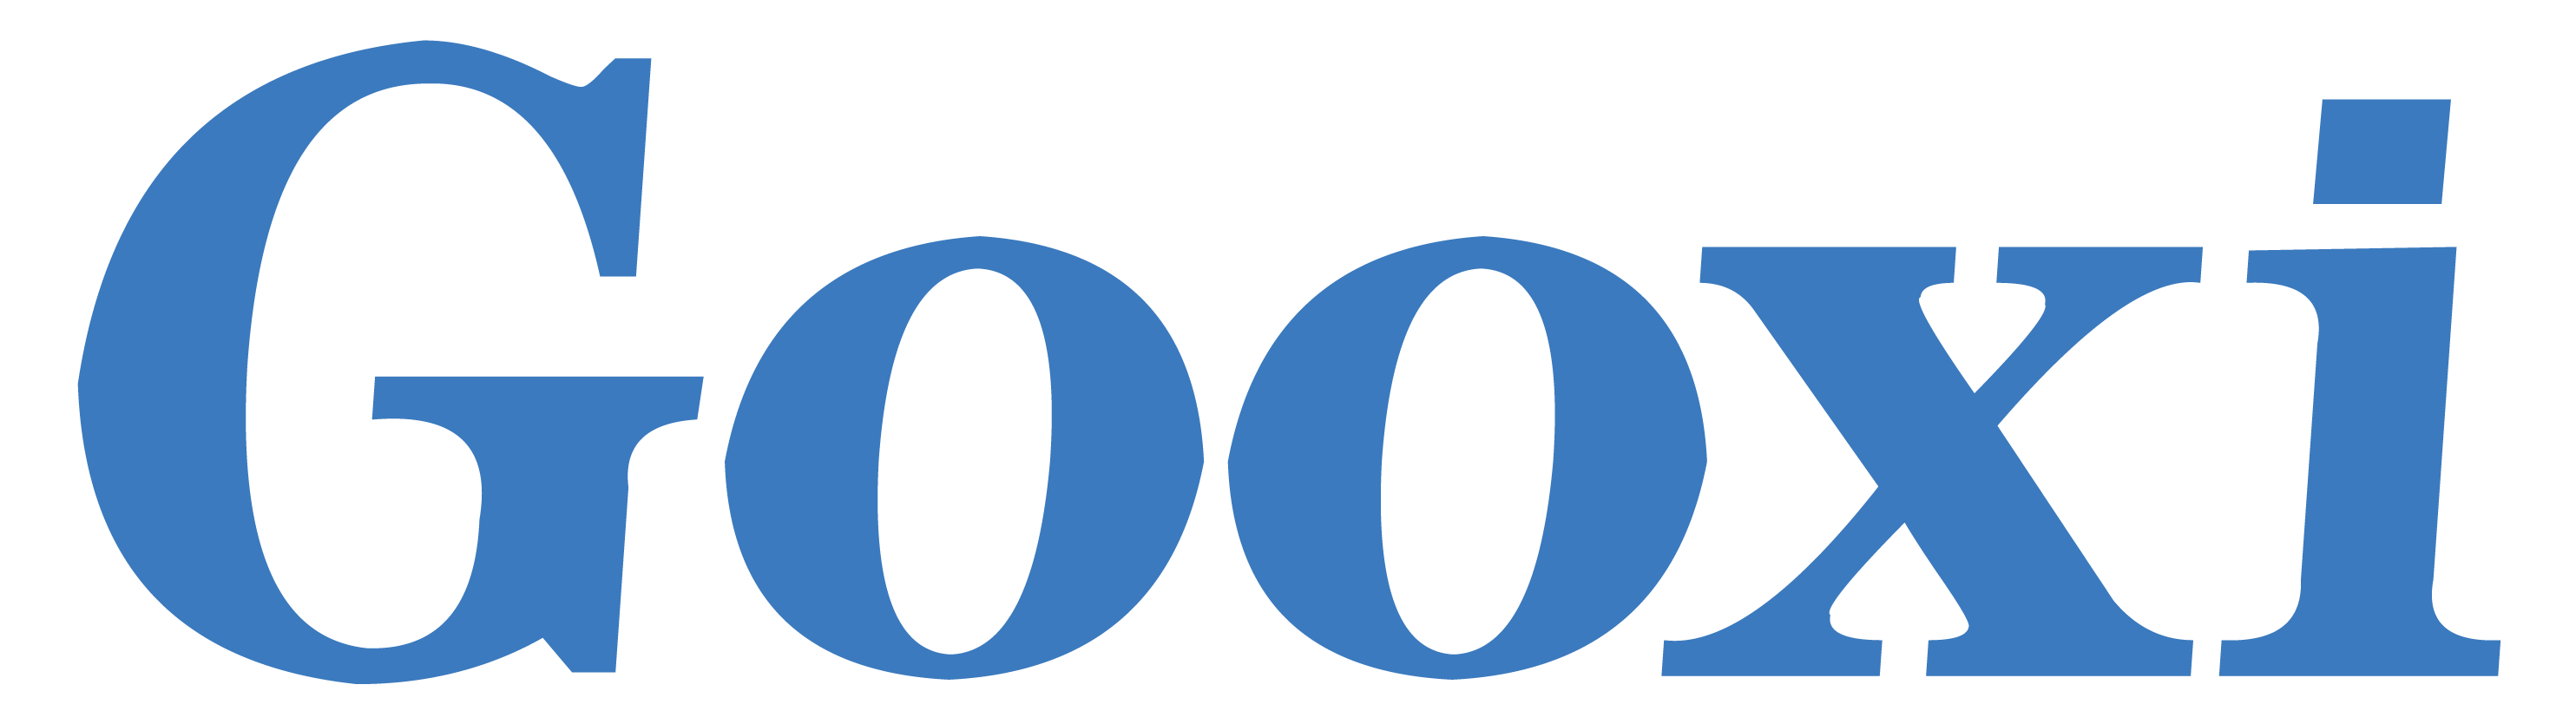 Gooxi Hardware Server Storage Logo